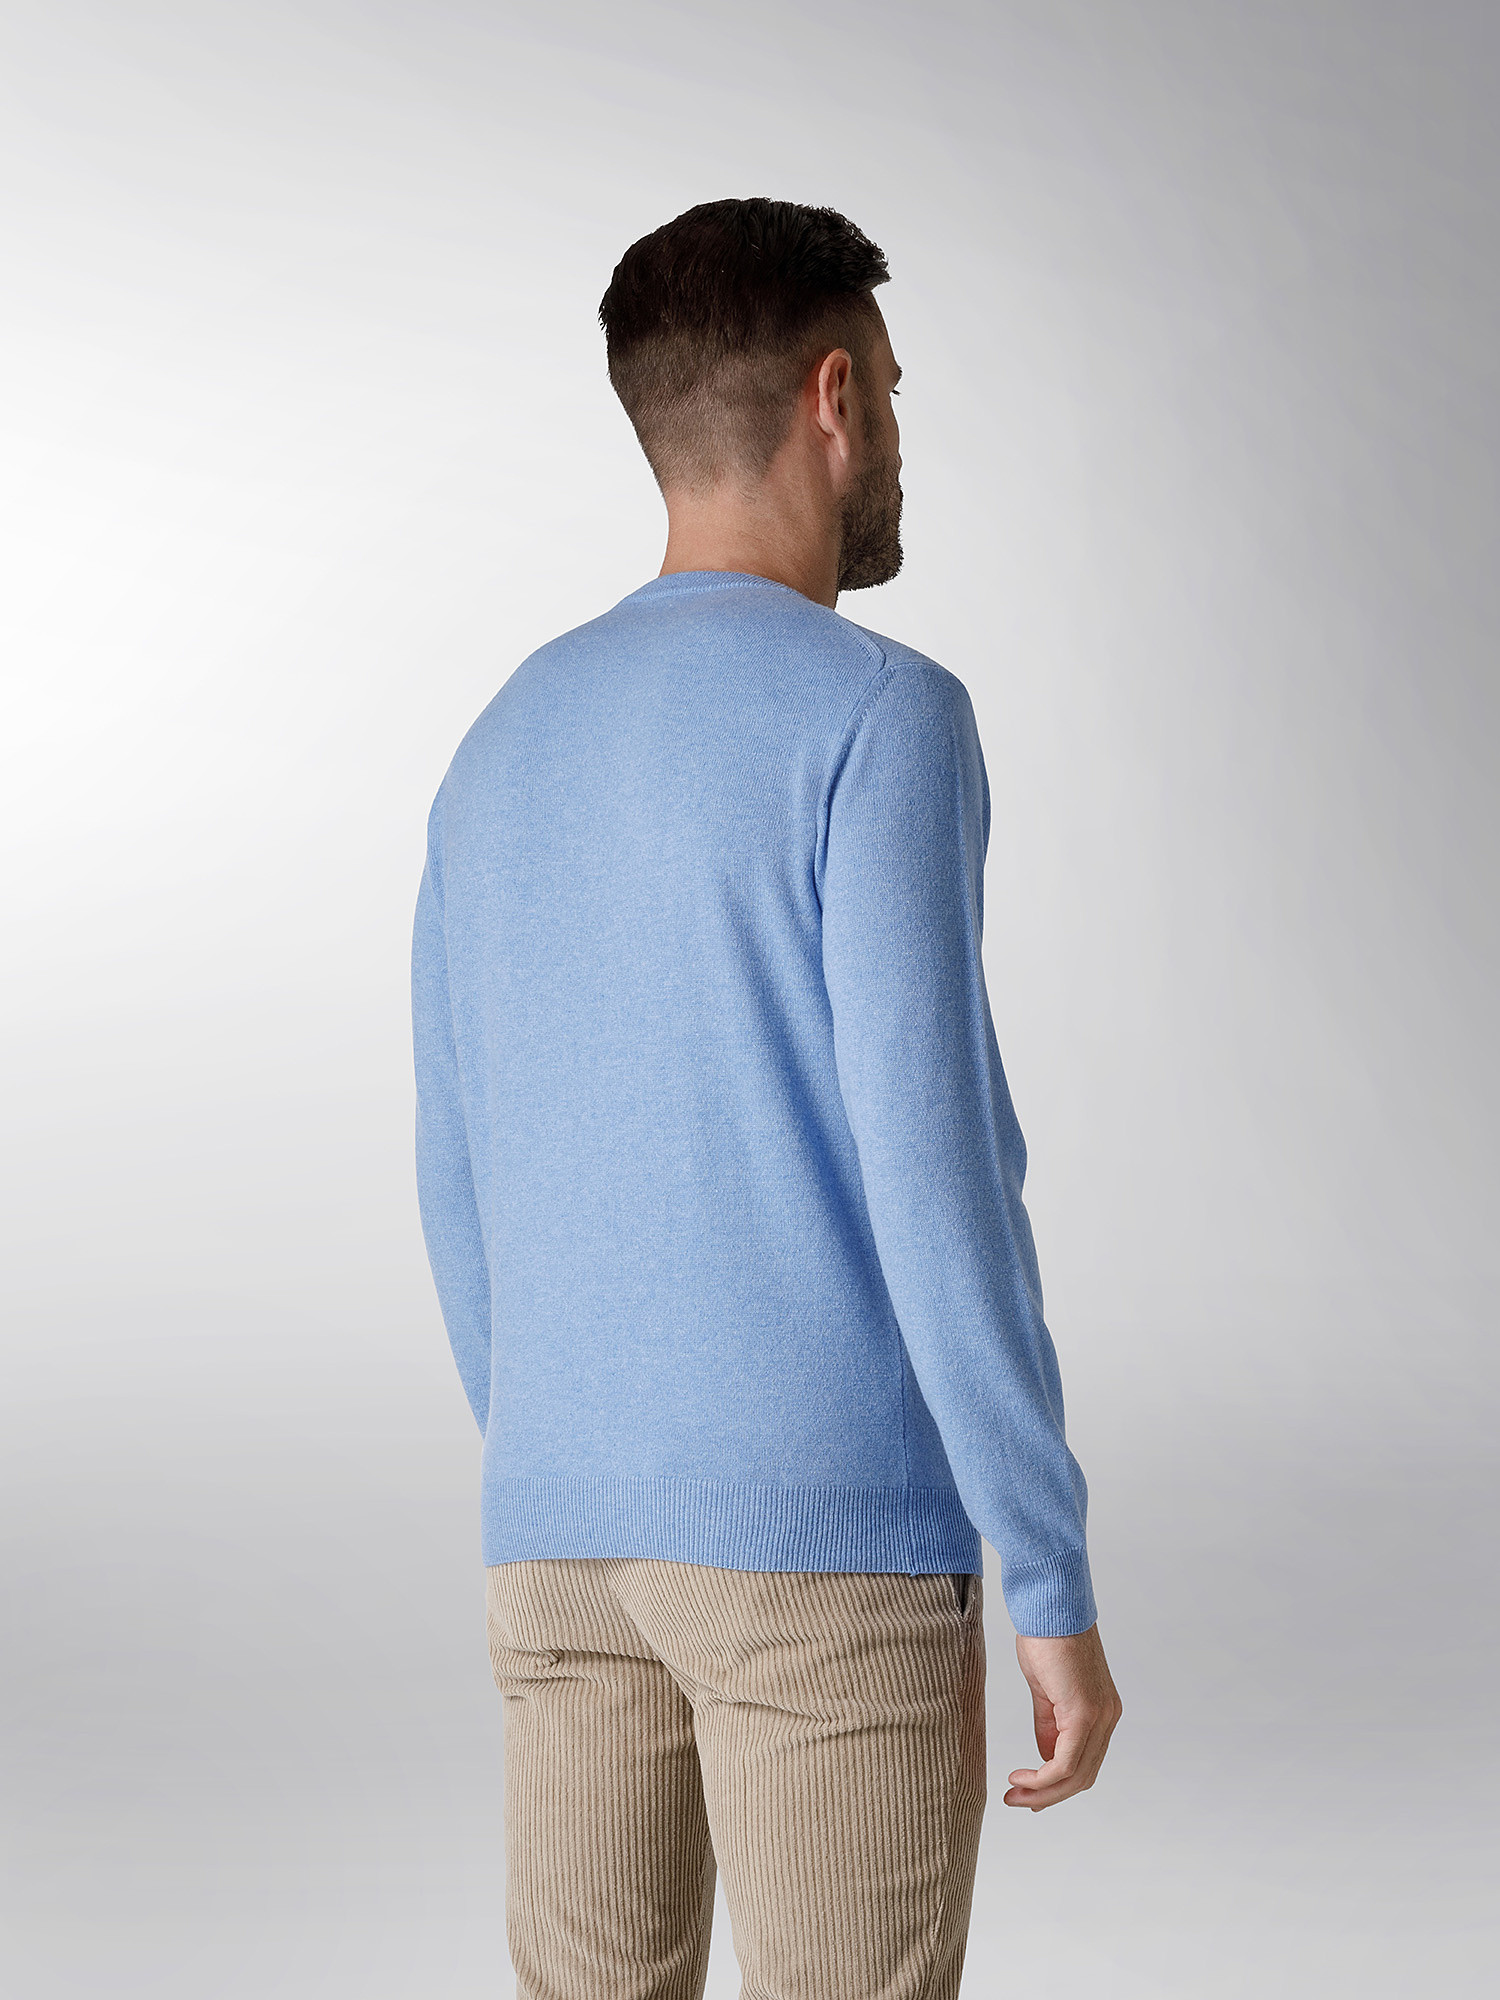 Coin Cashmere - Crewneck sweater in pure cashmere, Blue Celeste, large image number 2